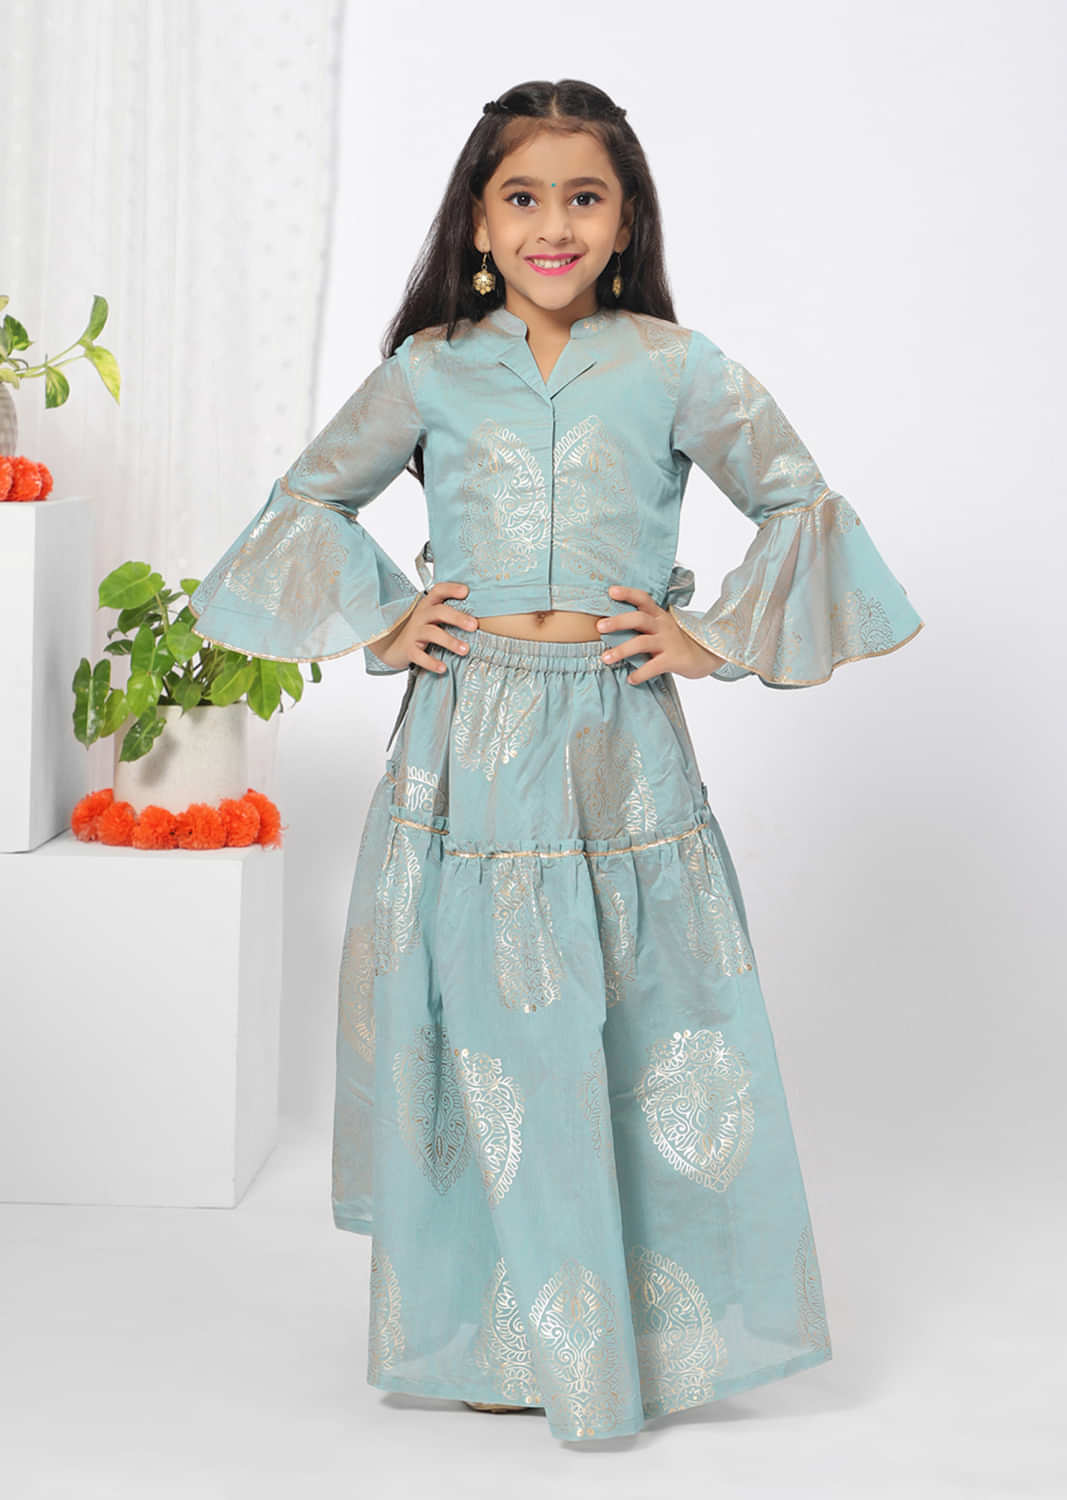 Kalki Girls Green Lehenga Choli In Chanderi Silk With Foil Printed ethnic Motifs And Long Sleeves By Mini Chic